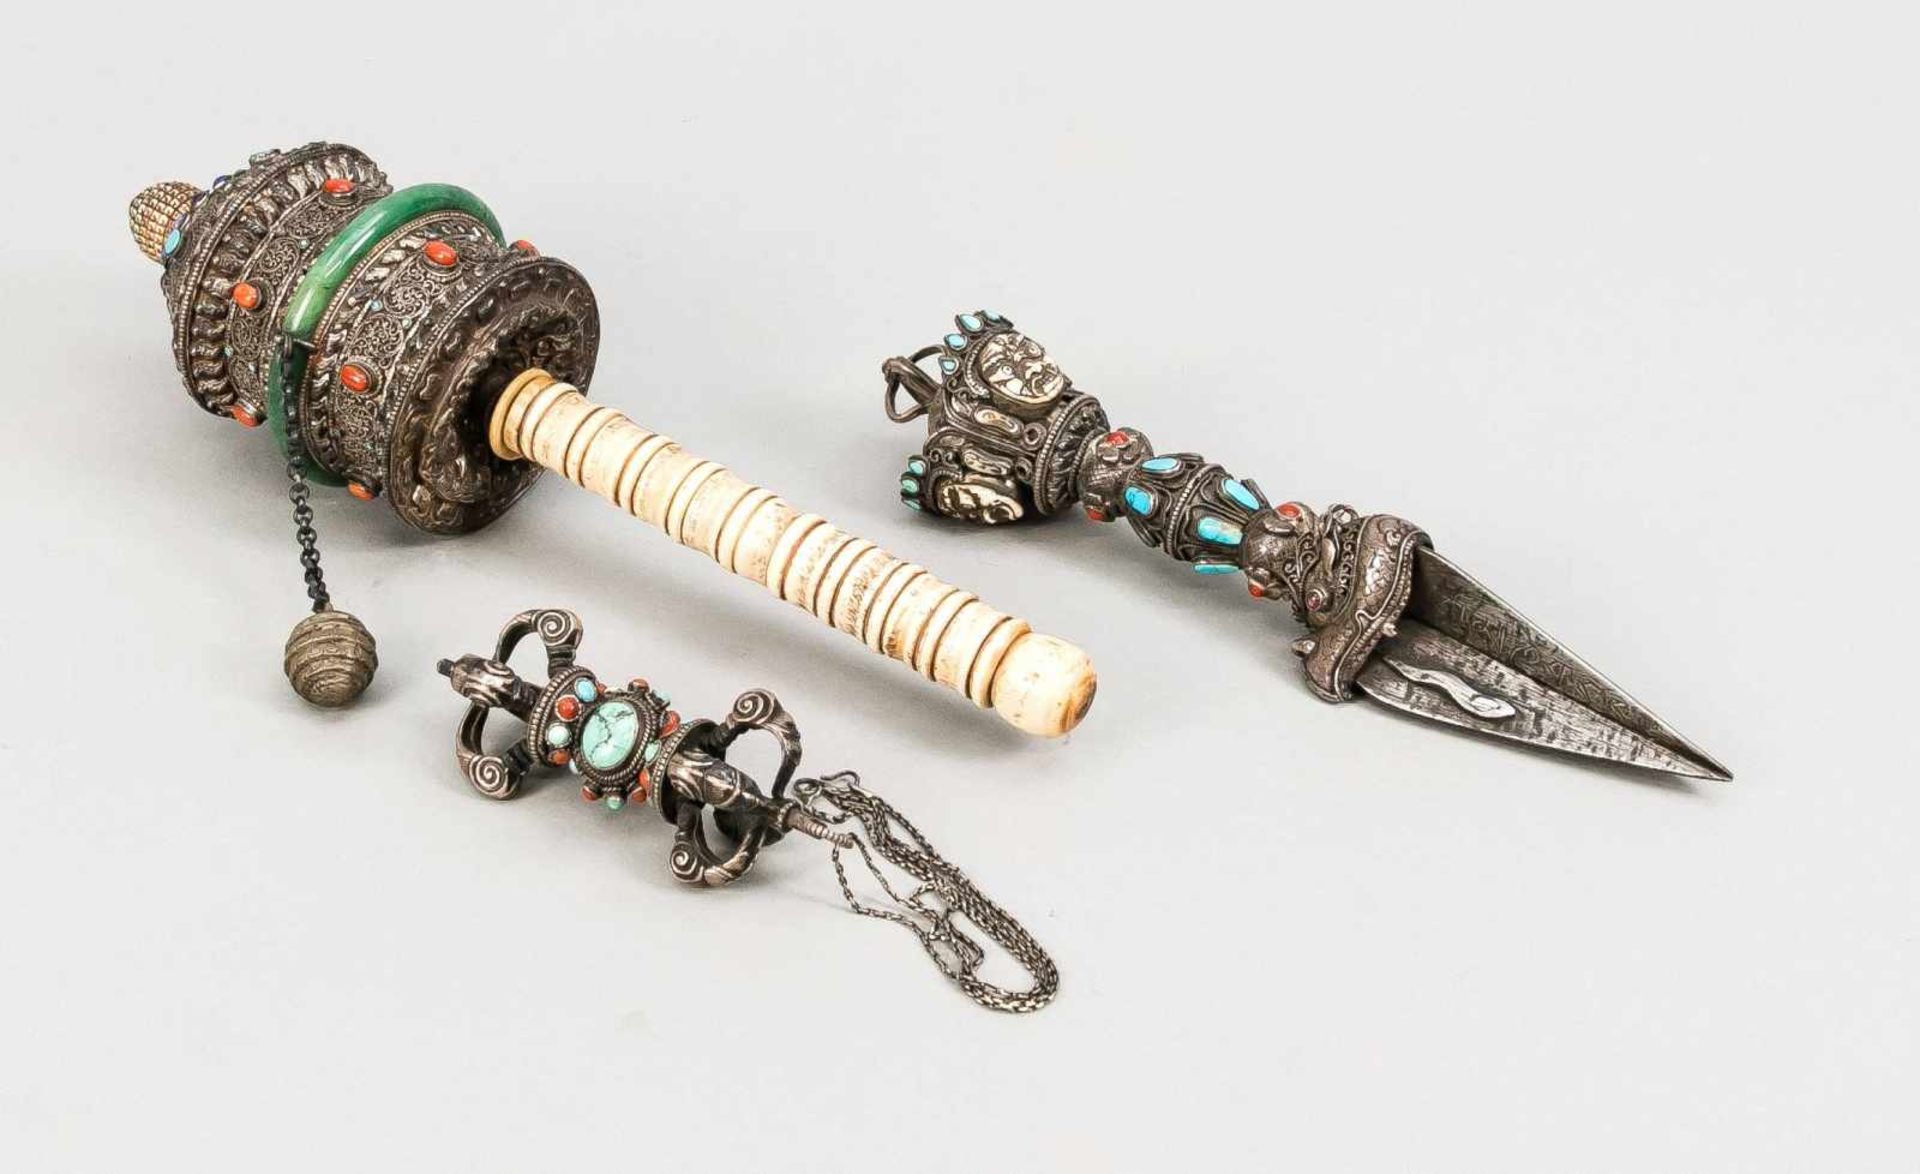 3 ritual objects from Tibet, 19./20. Century, prayer wheel, Varja and Phurba. Iron, silver